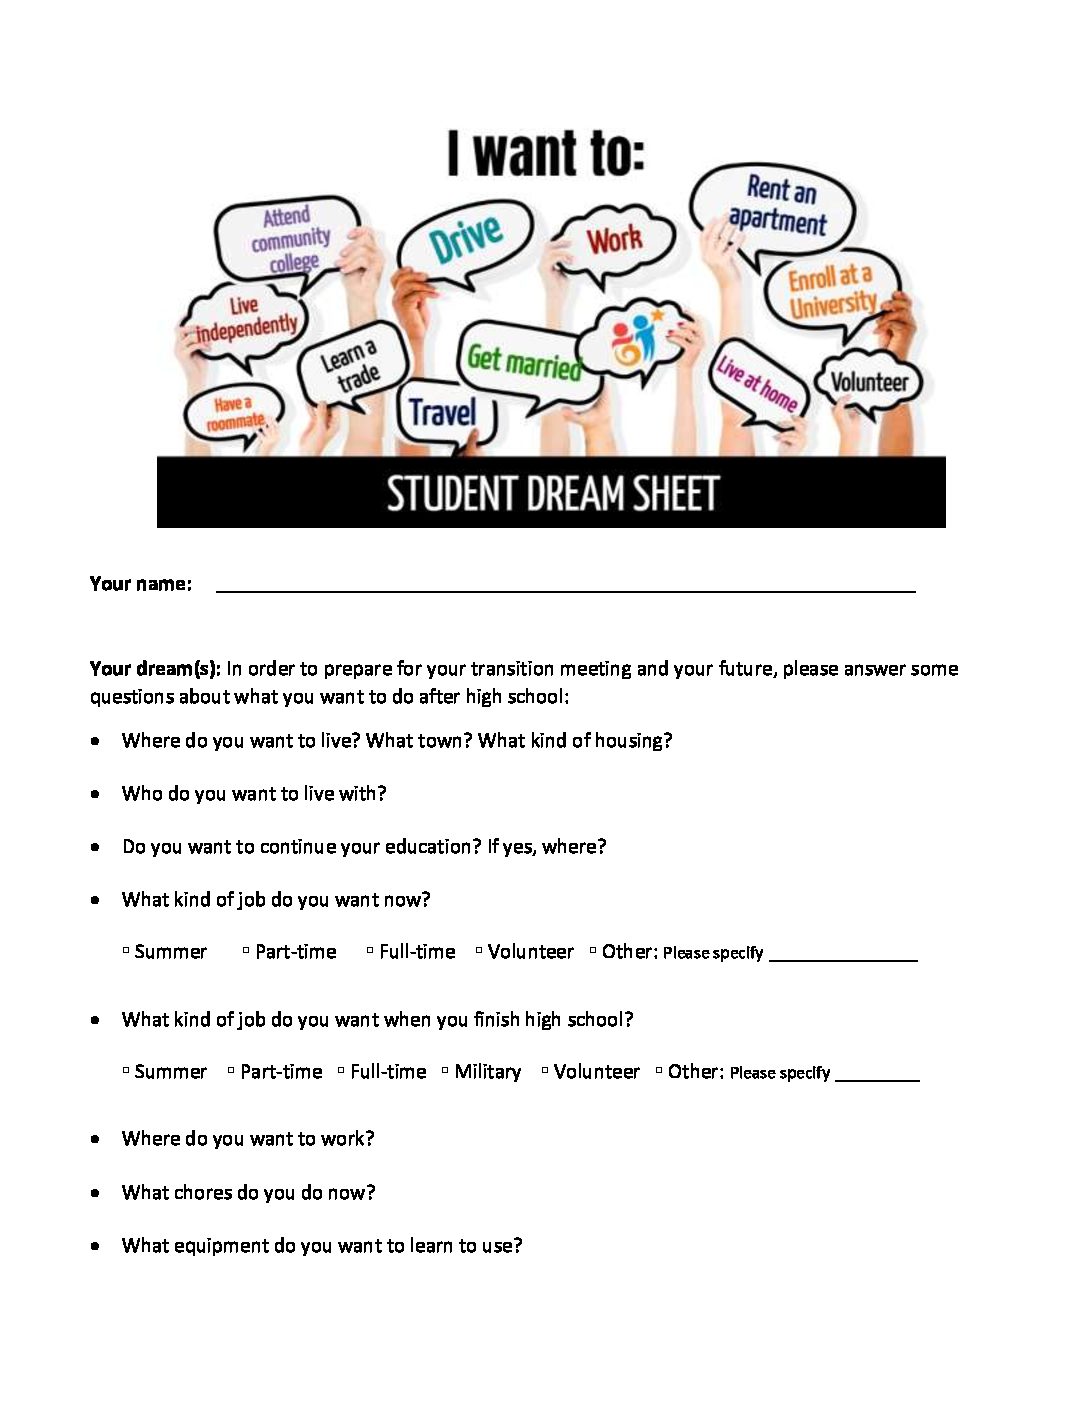 Student Dream Sheet